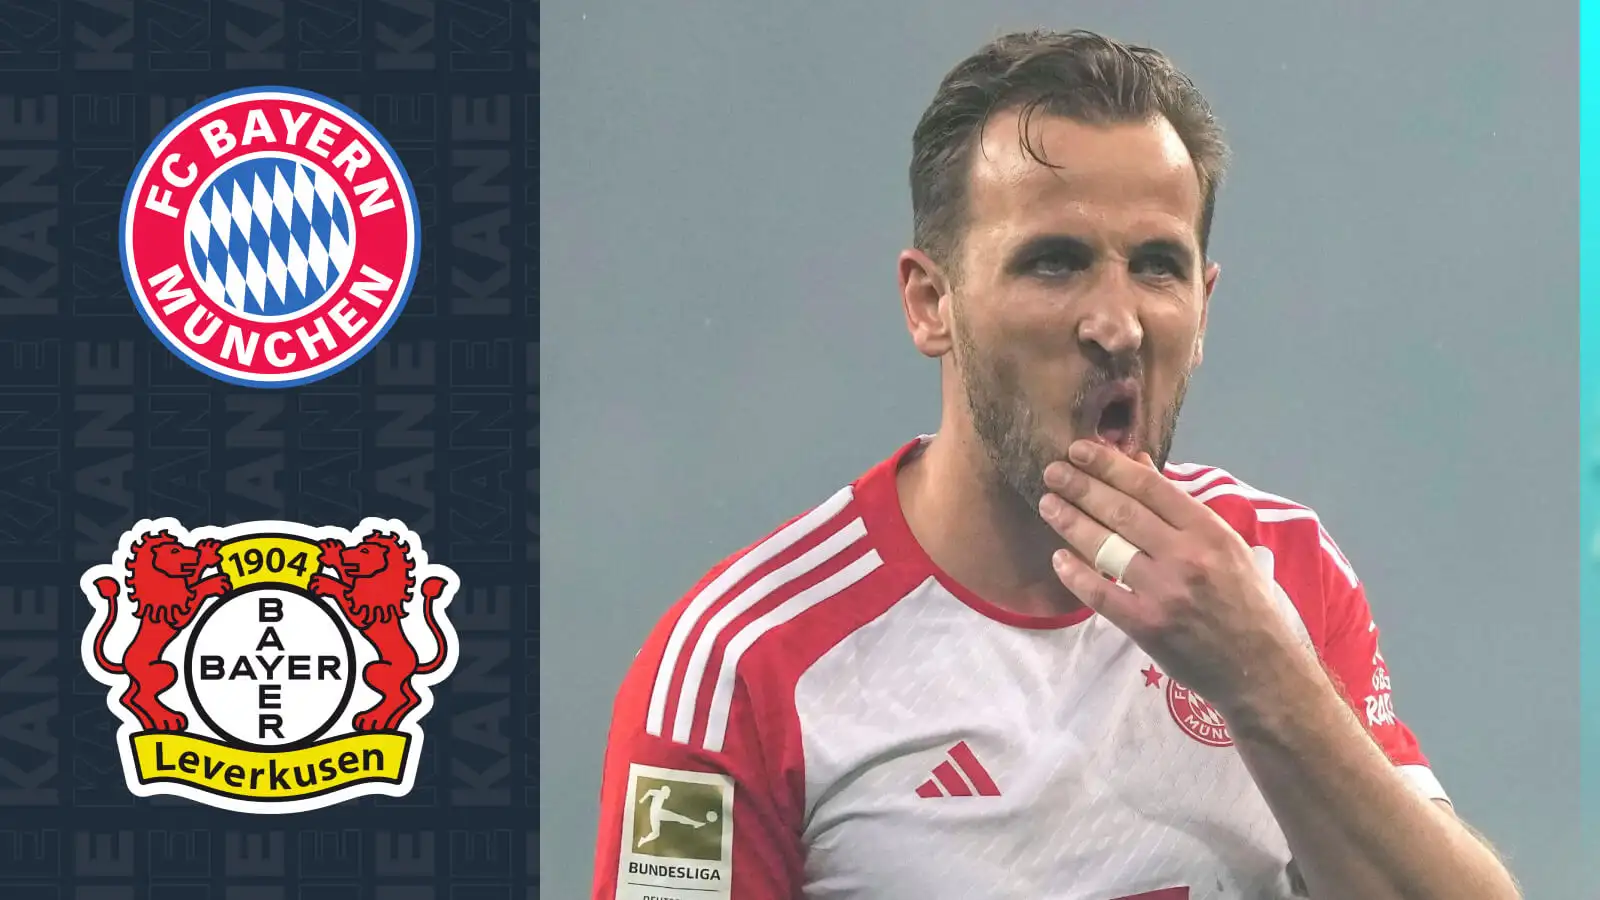 Harry Kane aesthetic layouts despondent through substantial Bayern Munich and also Bayer Leverkusen badges alongside him.